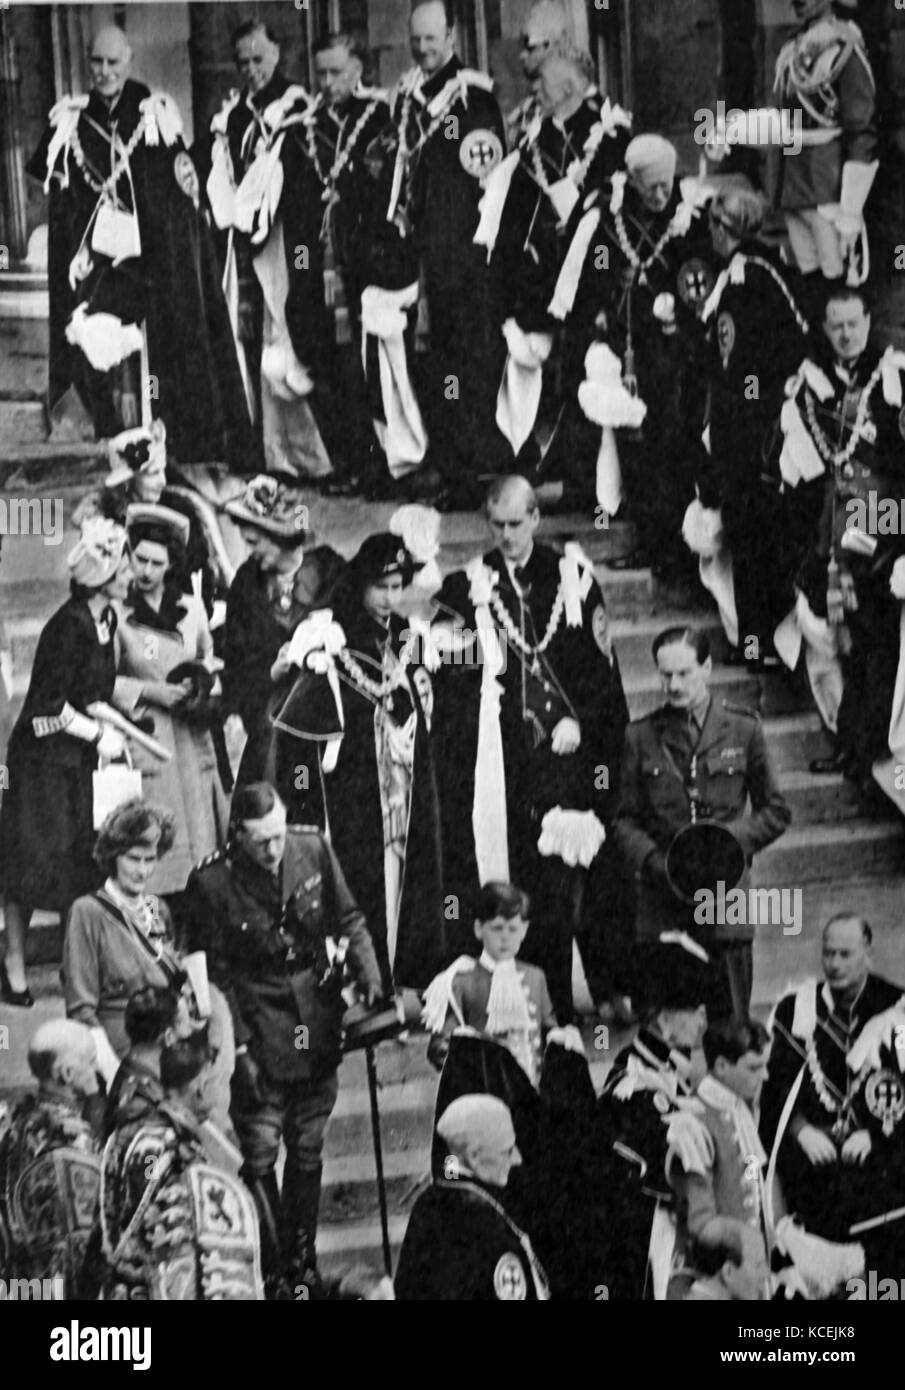 Princess Elizabeth (later queen Elizabeth II) with Prince Phillip (The Duke of Edinburgh) attending the Order of the Garter 1950 Stock Photo